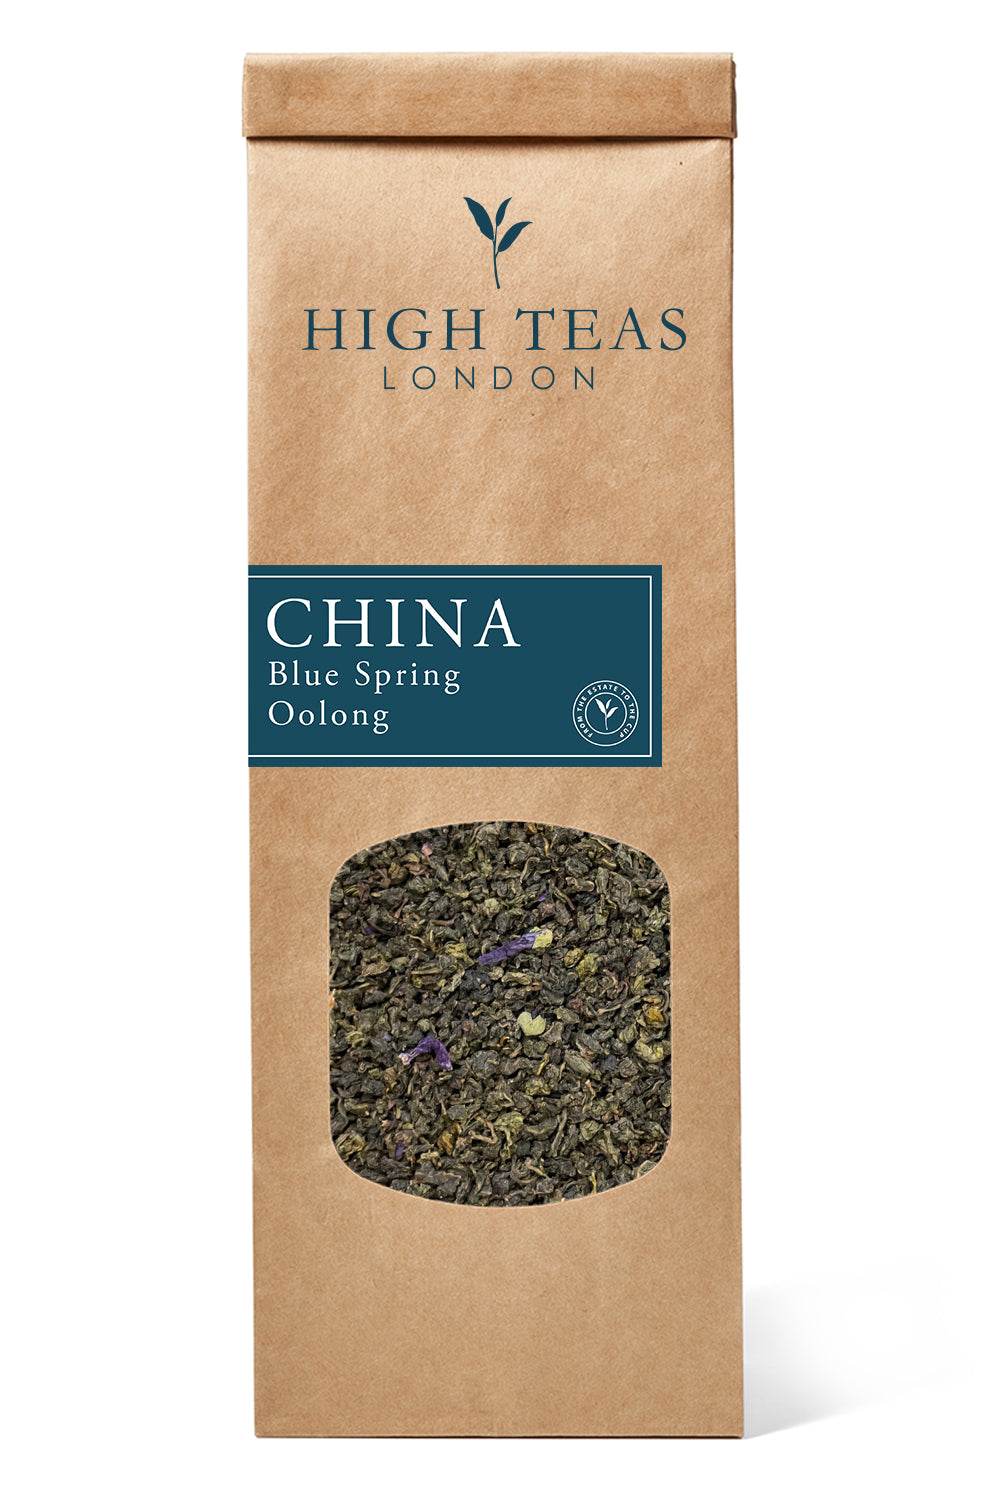 China - Blue Spring Oolong-50g-Loose Leaf Tea-High Teas